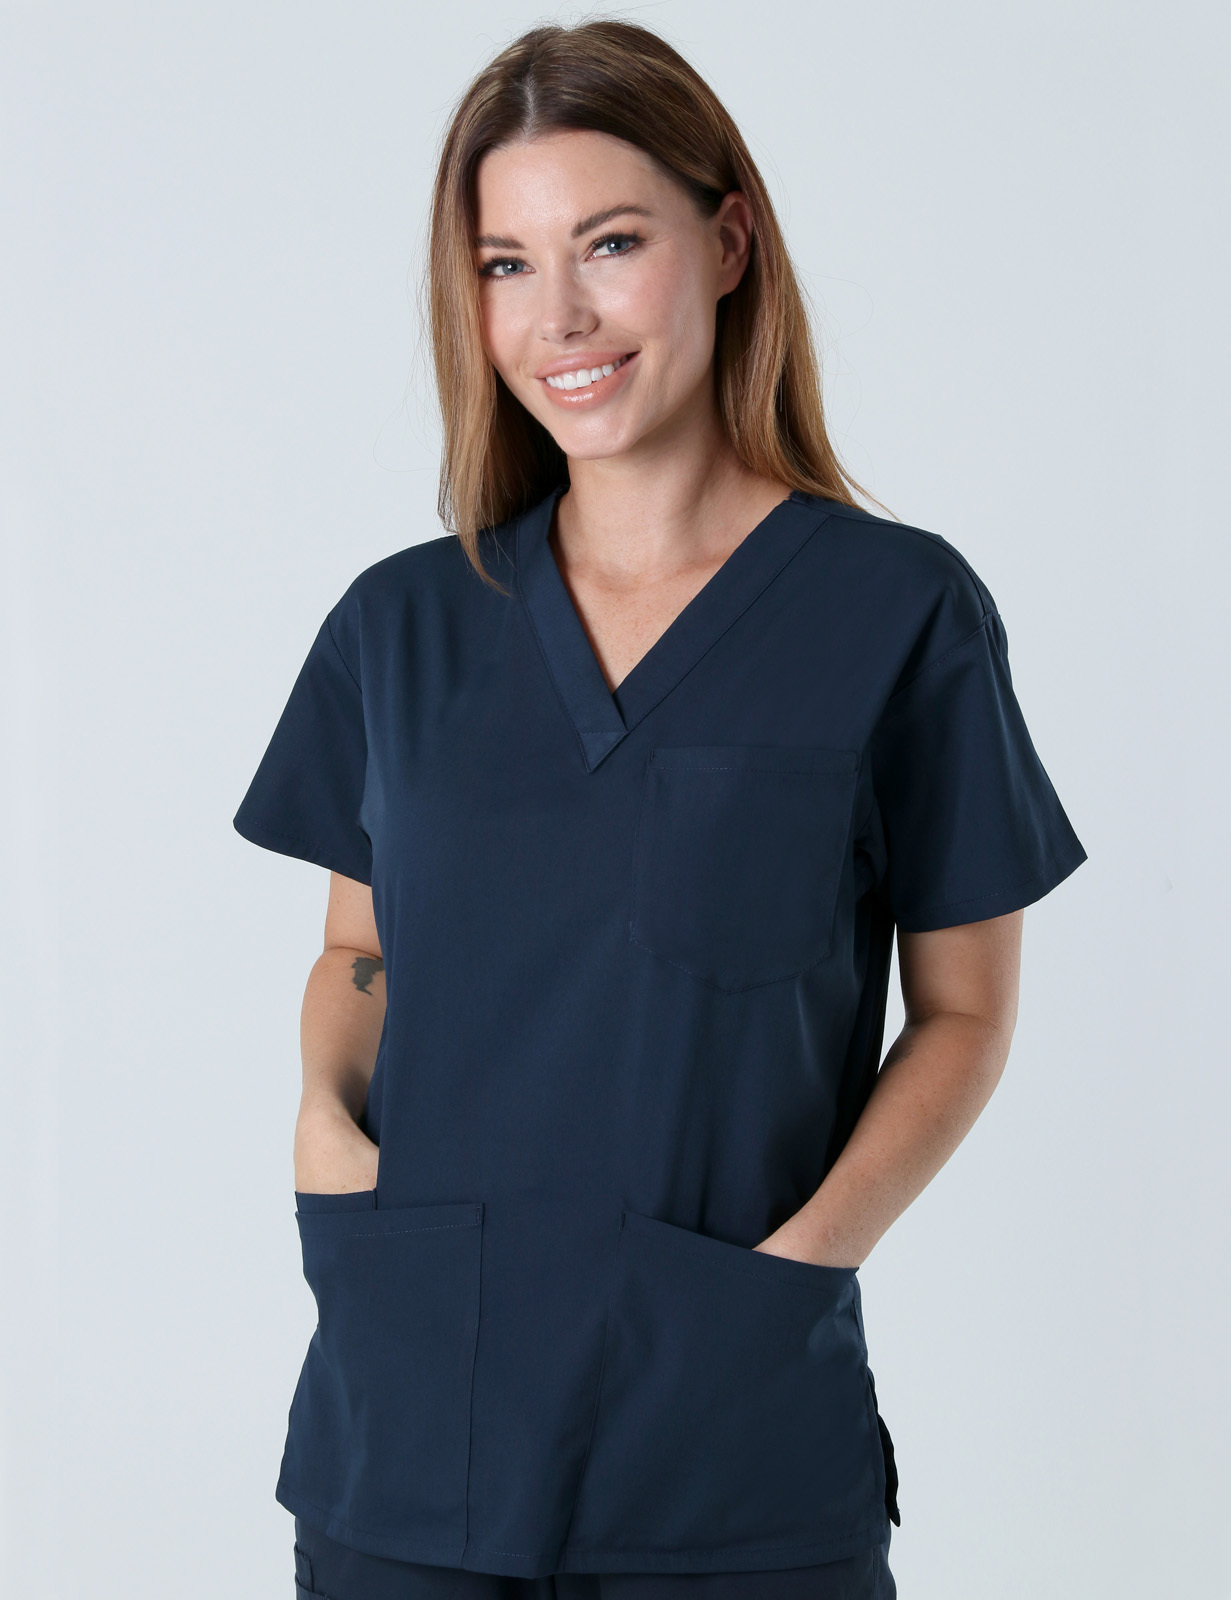 Monash Health Newborn Doctor Uniform Set Bundle (4 Pocket Top and Cargo Pants in Navy + Logo)